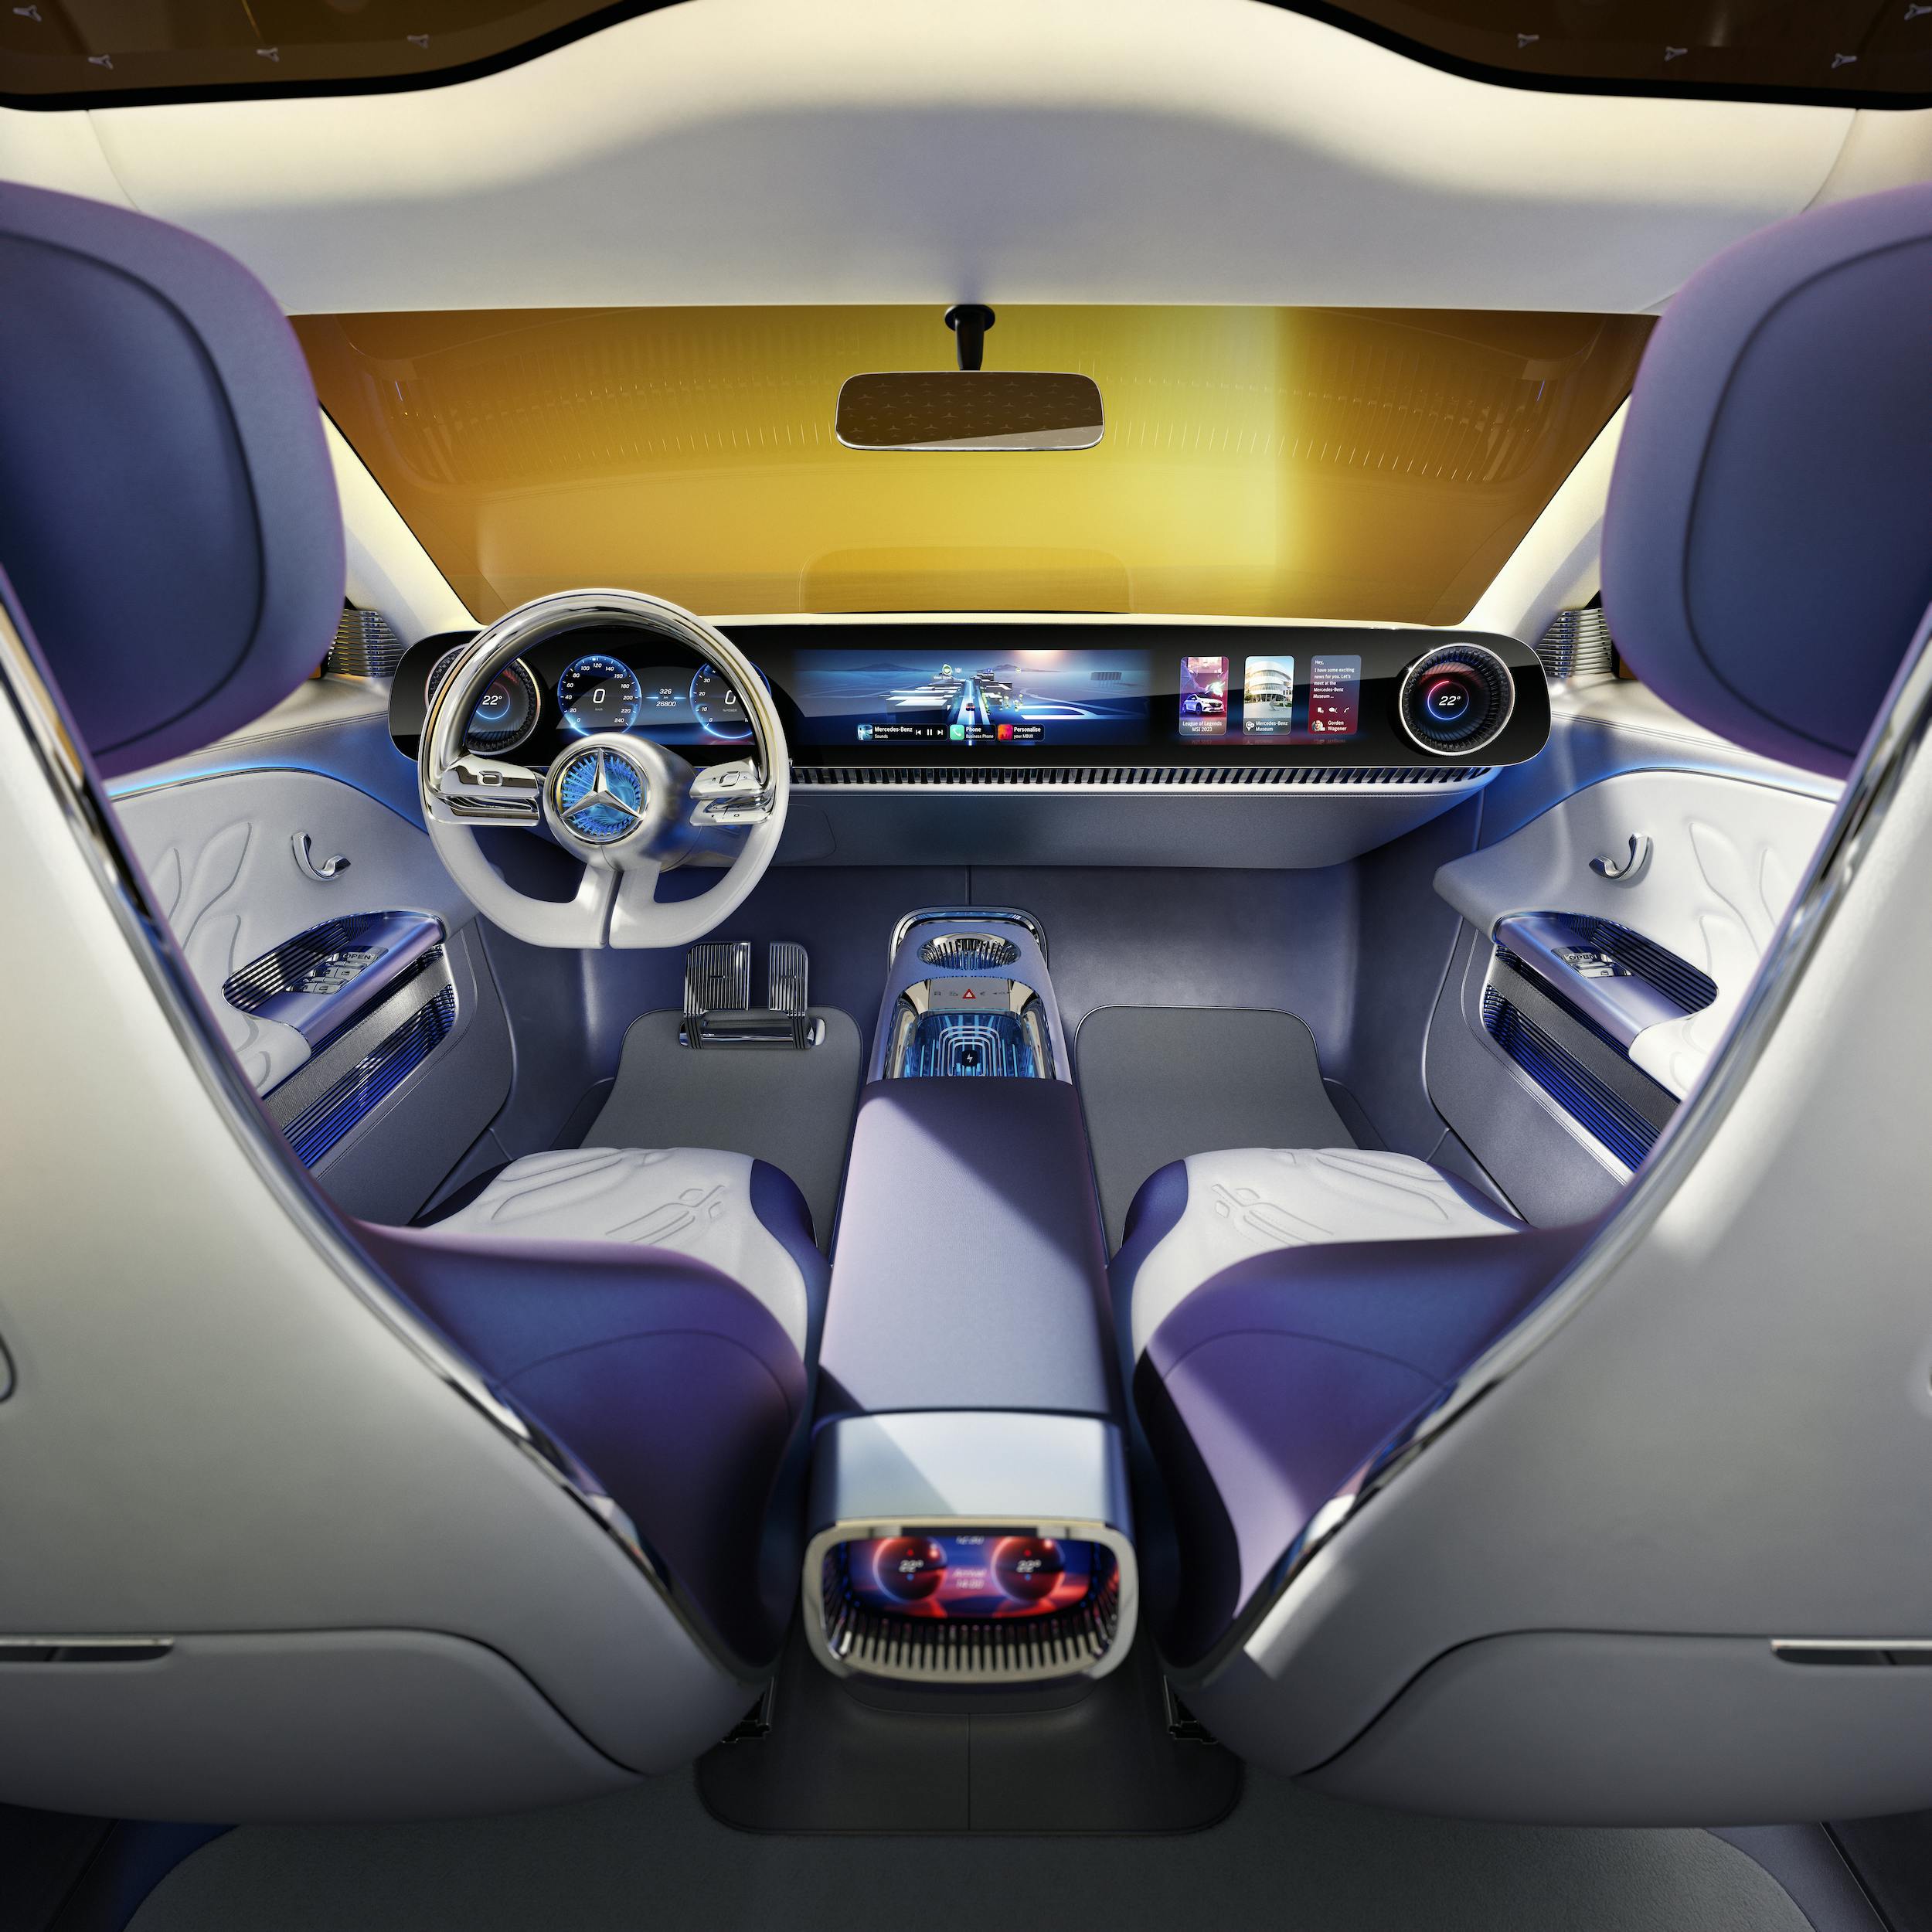 Mercedes-Benz Concept CLA Class interior front